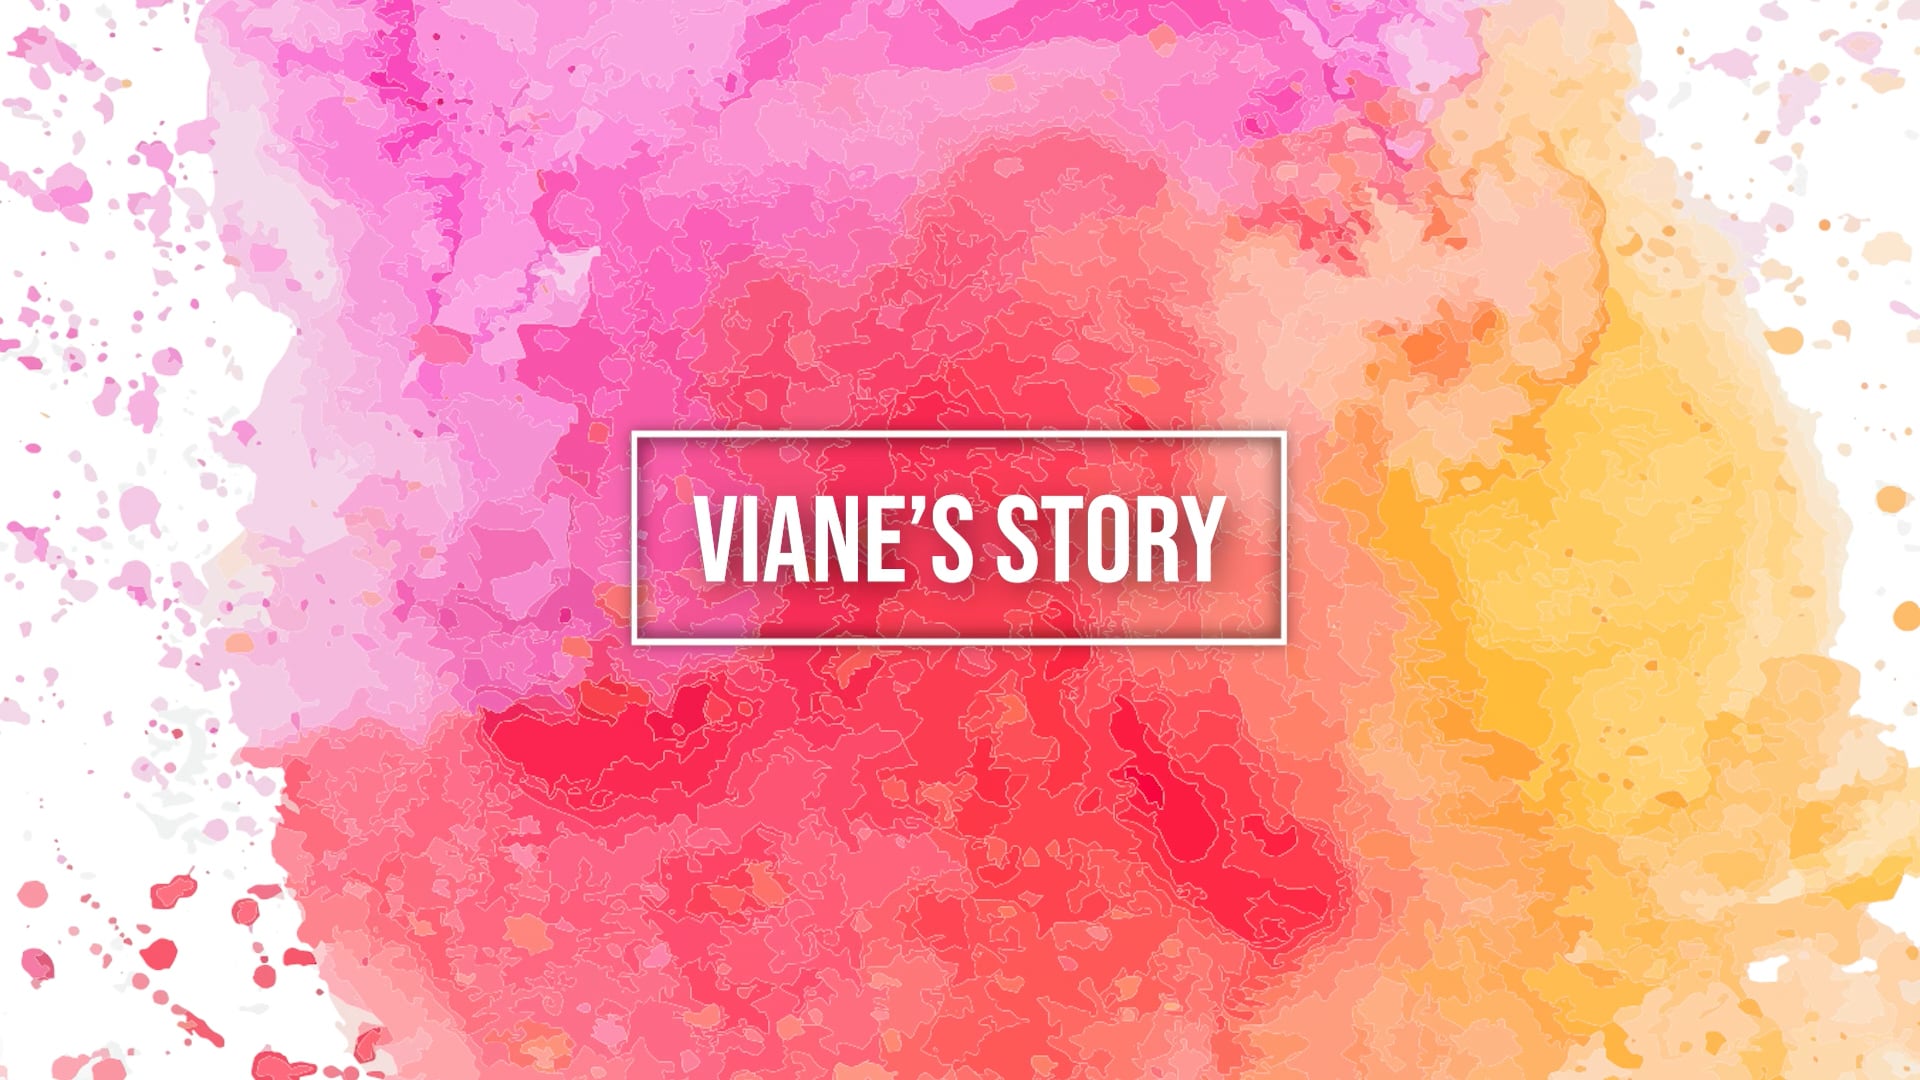 Viane's Story